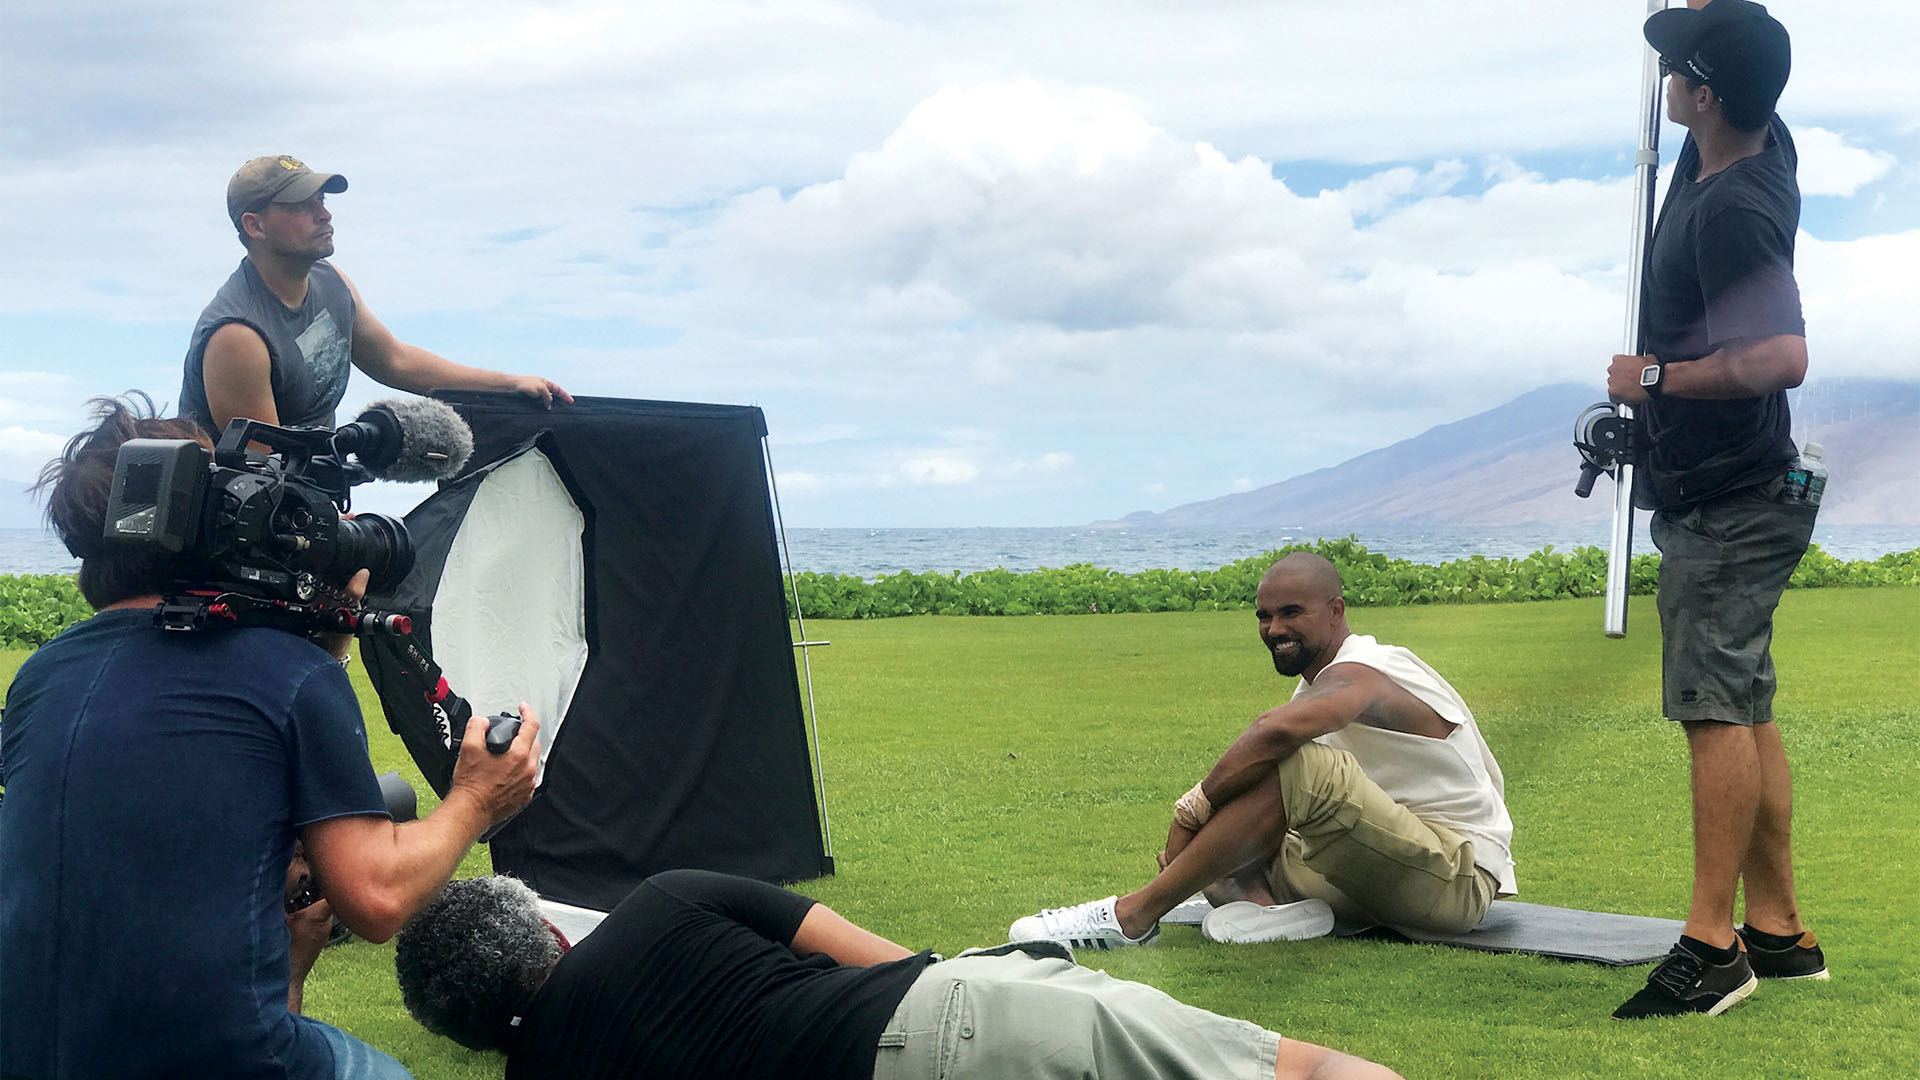 Making the Maui photo magic happen